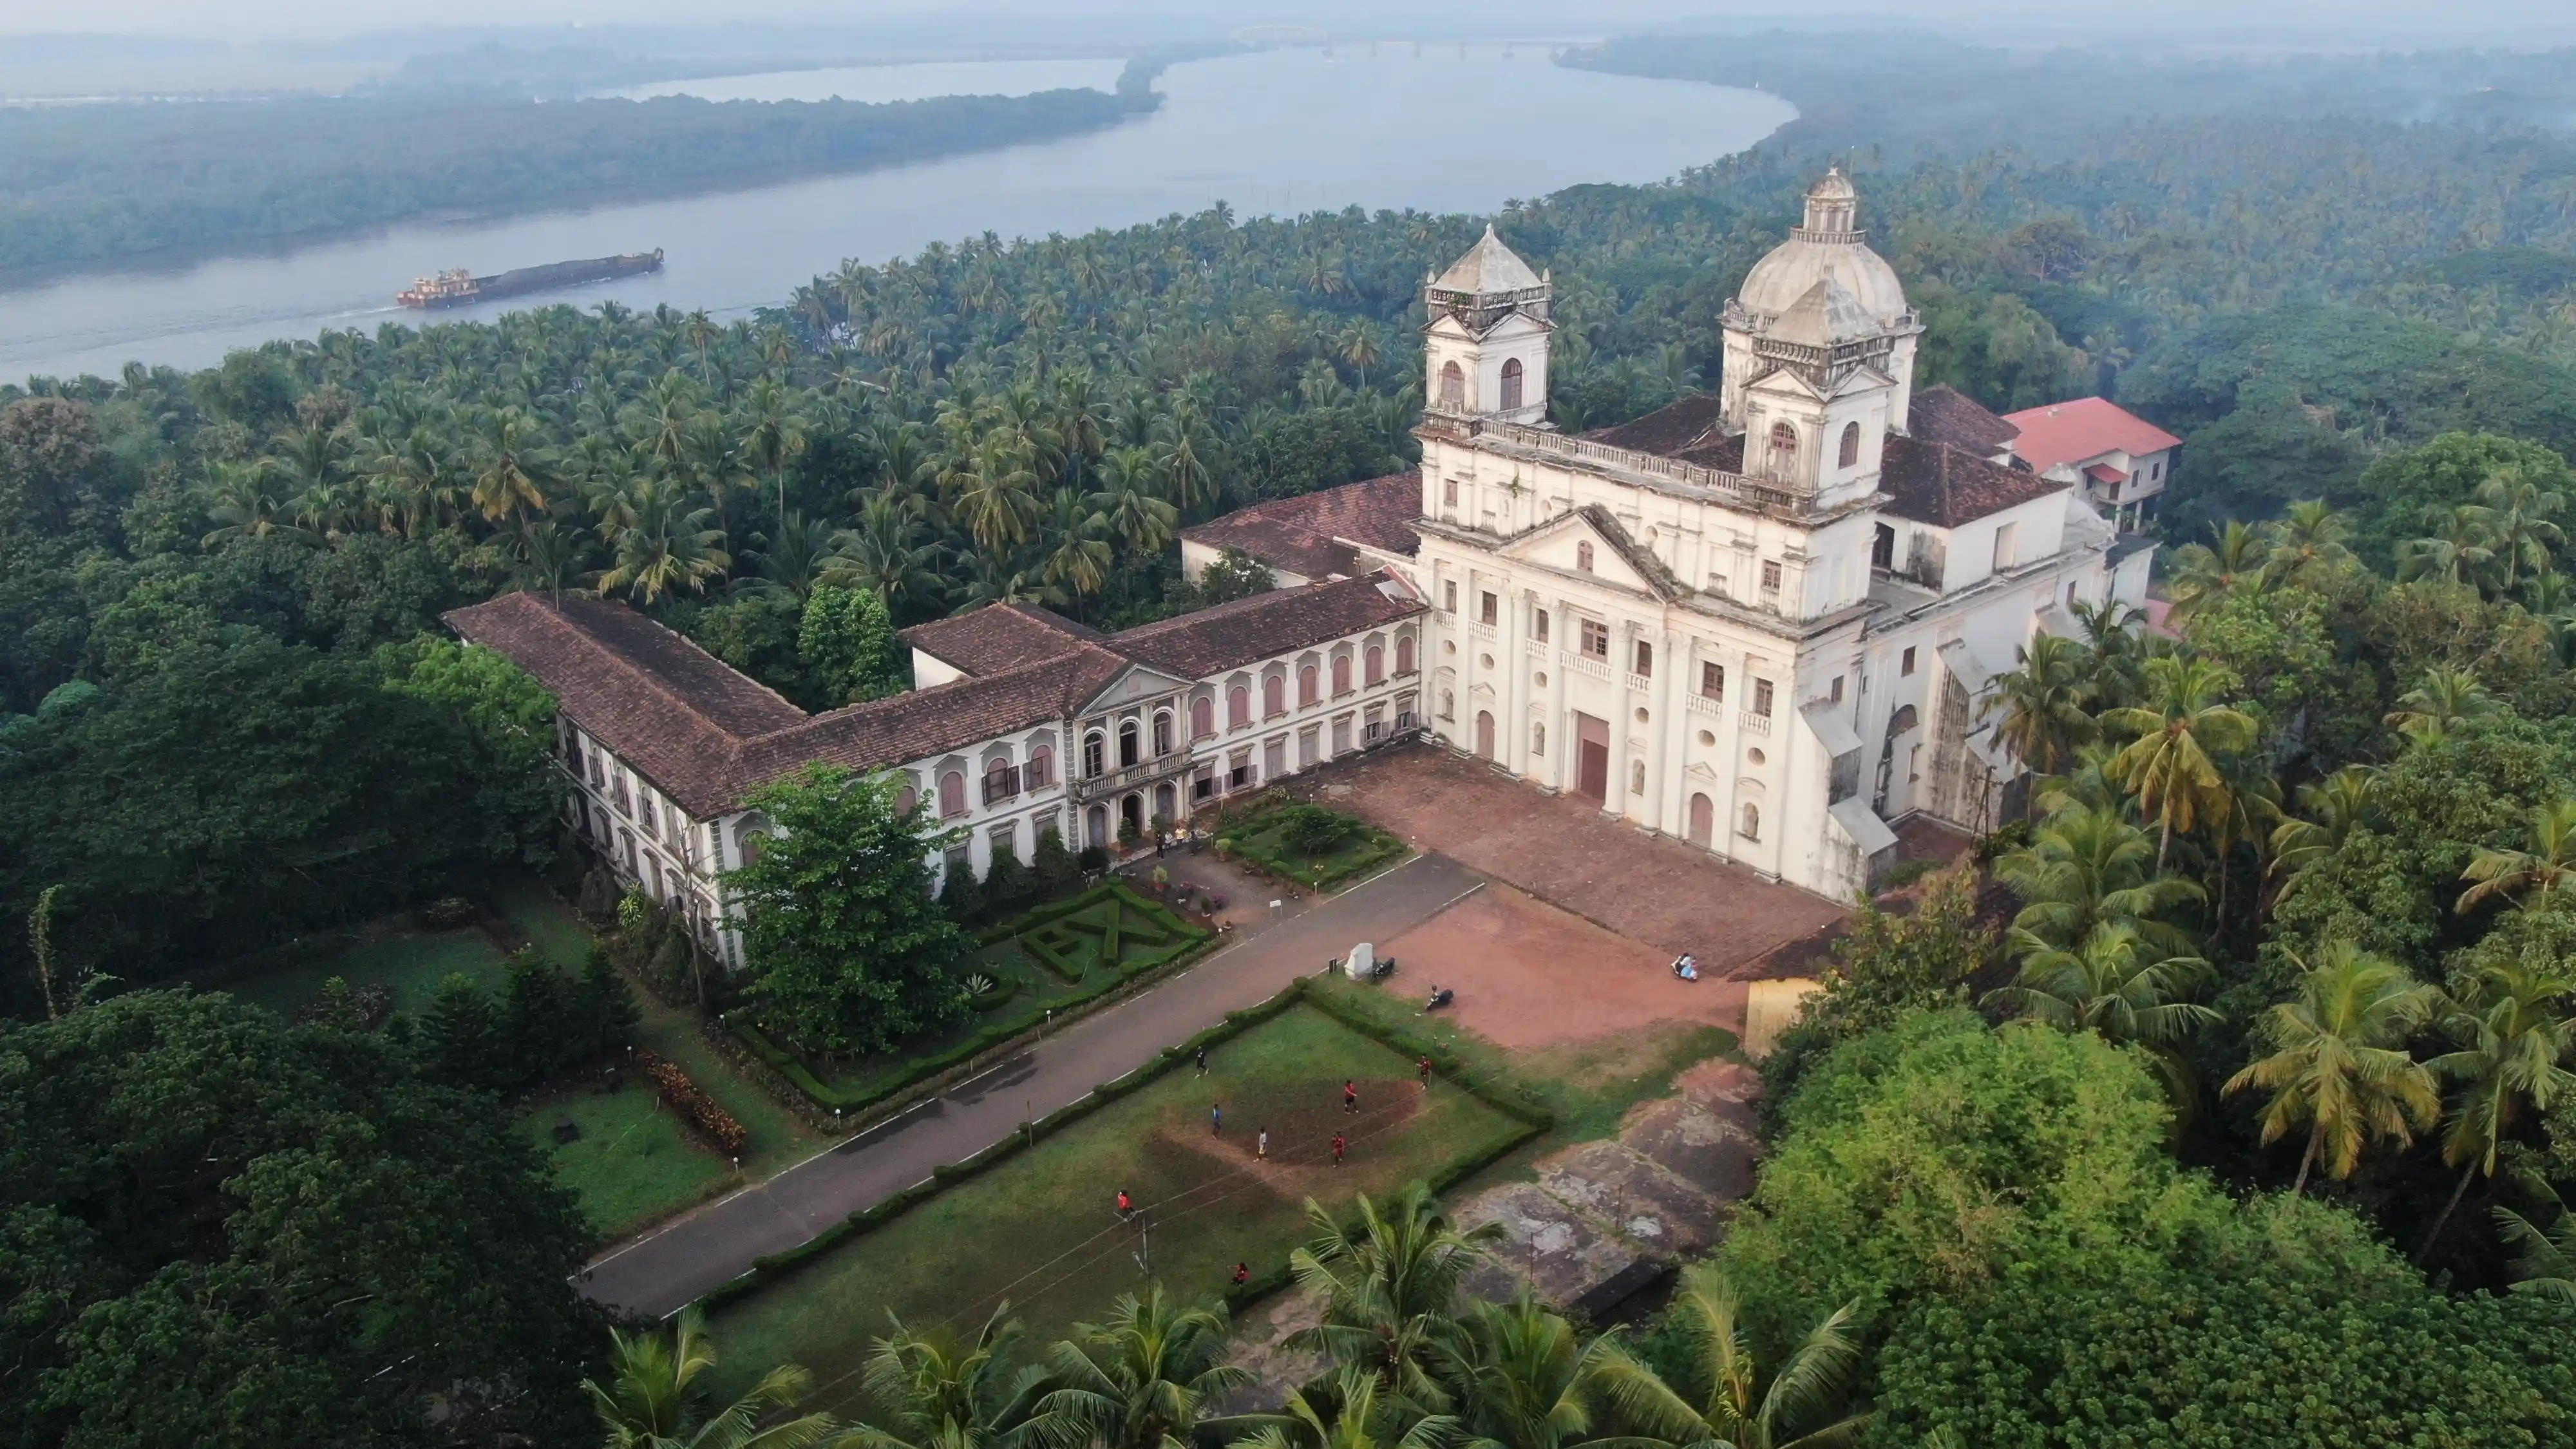 St Cajetan Church in Old Goa.